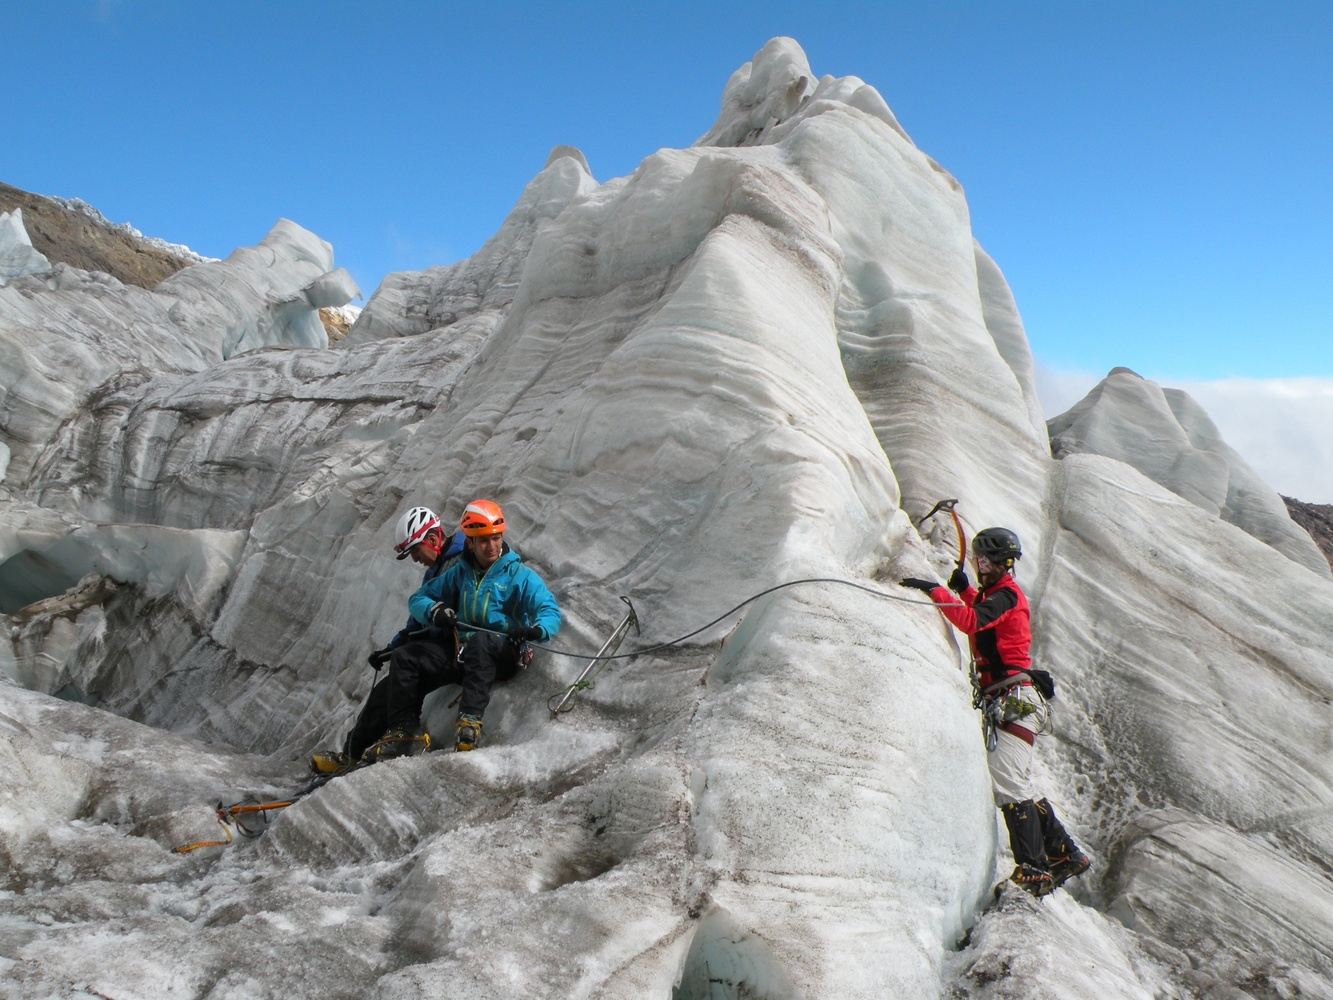 Glacier training & Cayambe climb (5.790 m / 18,996 ft) in 3 days